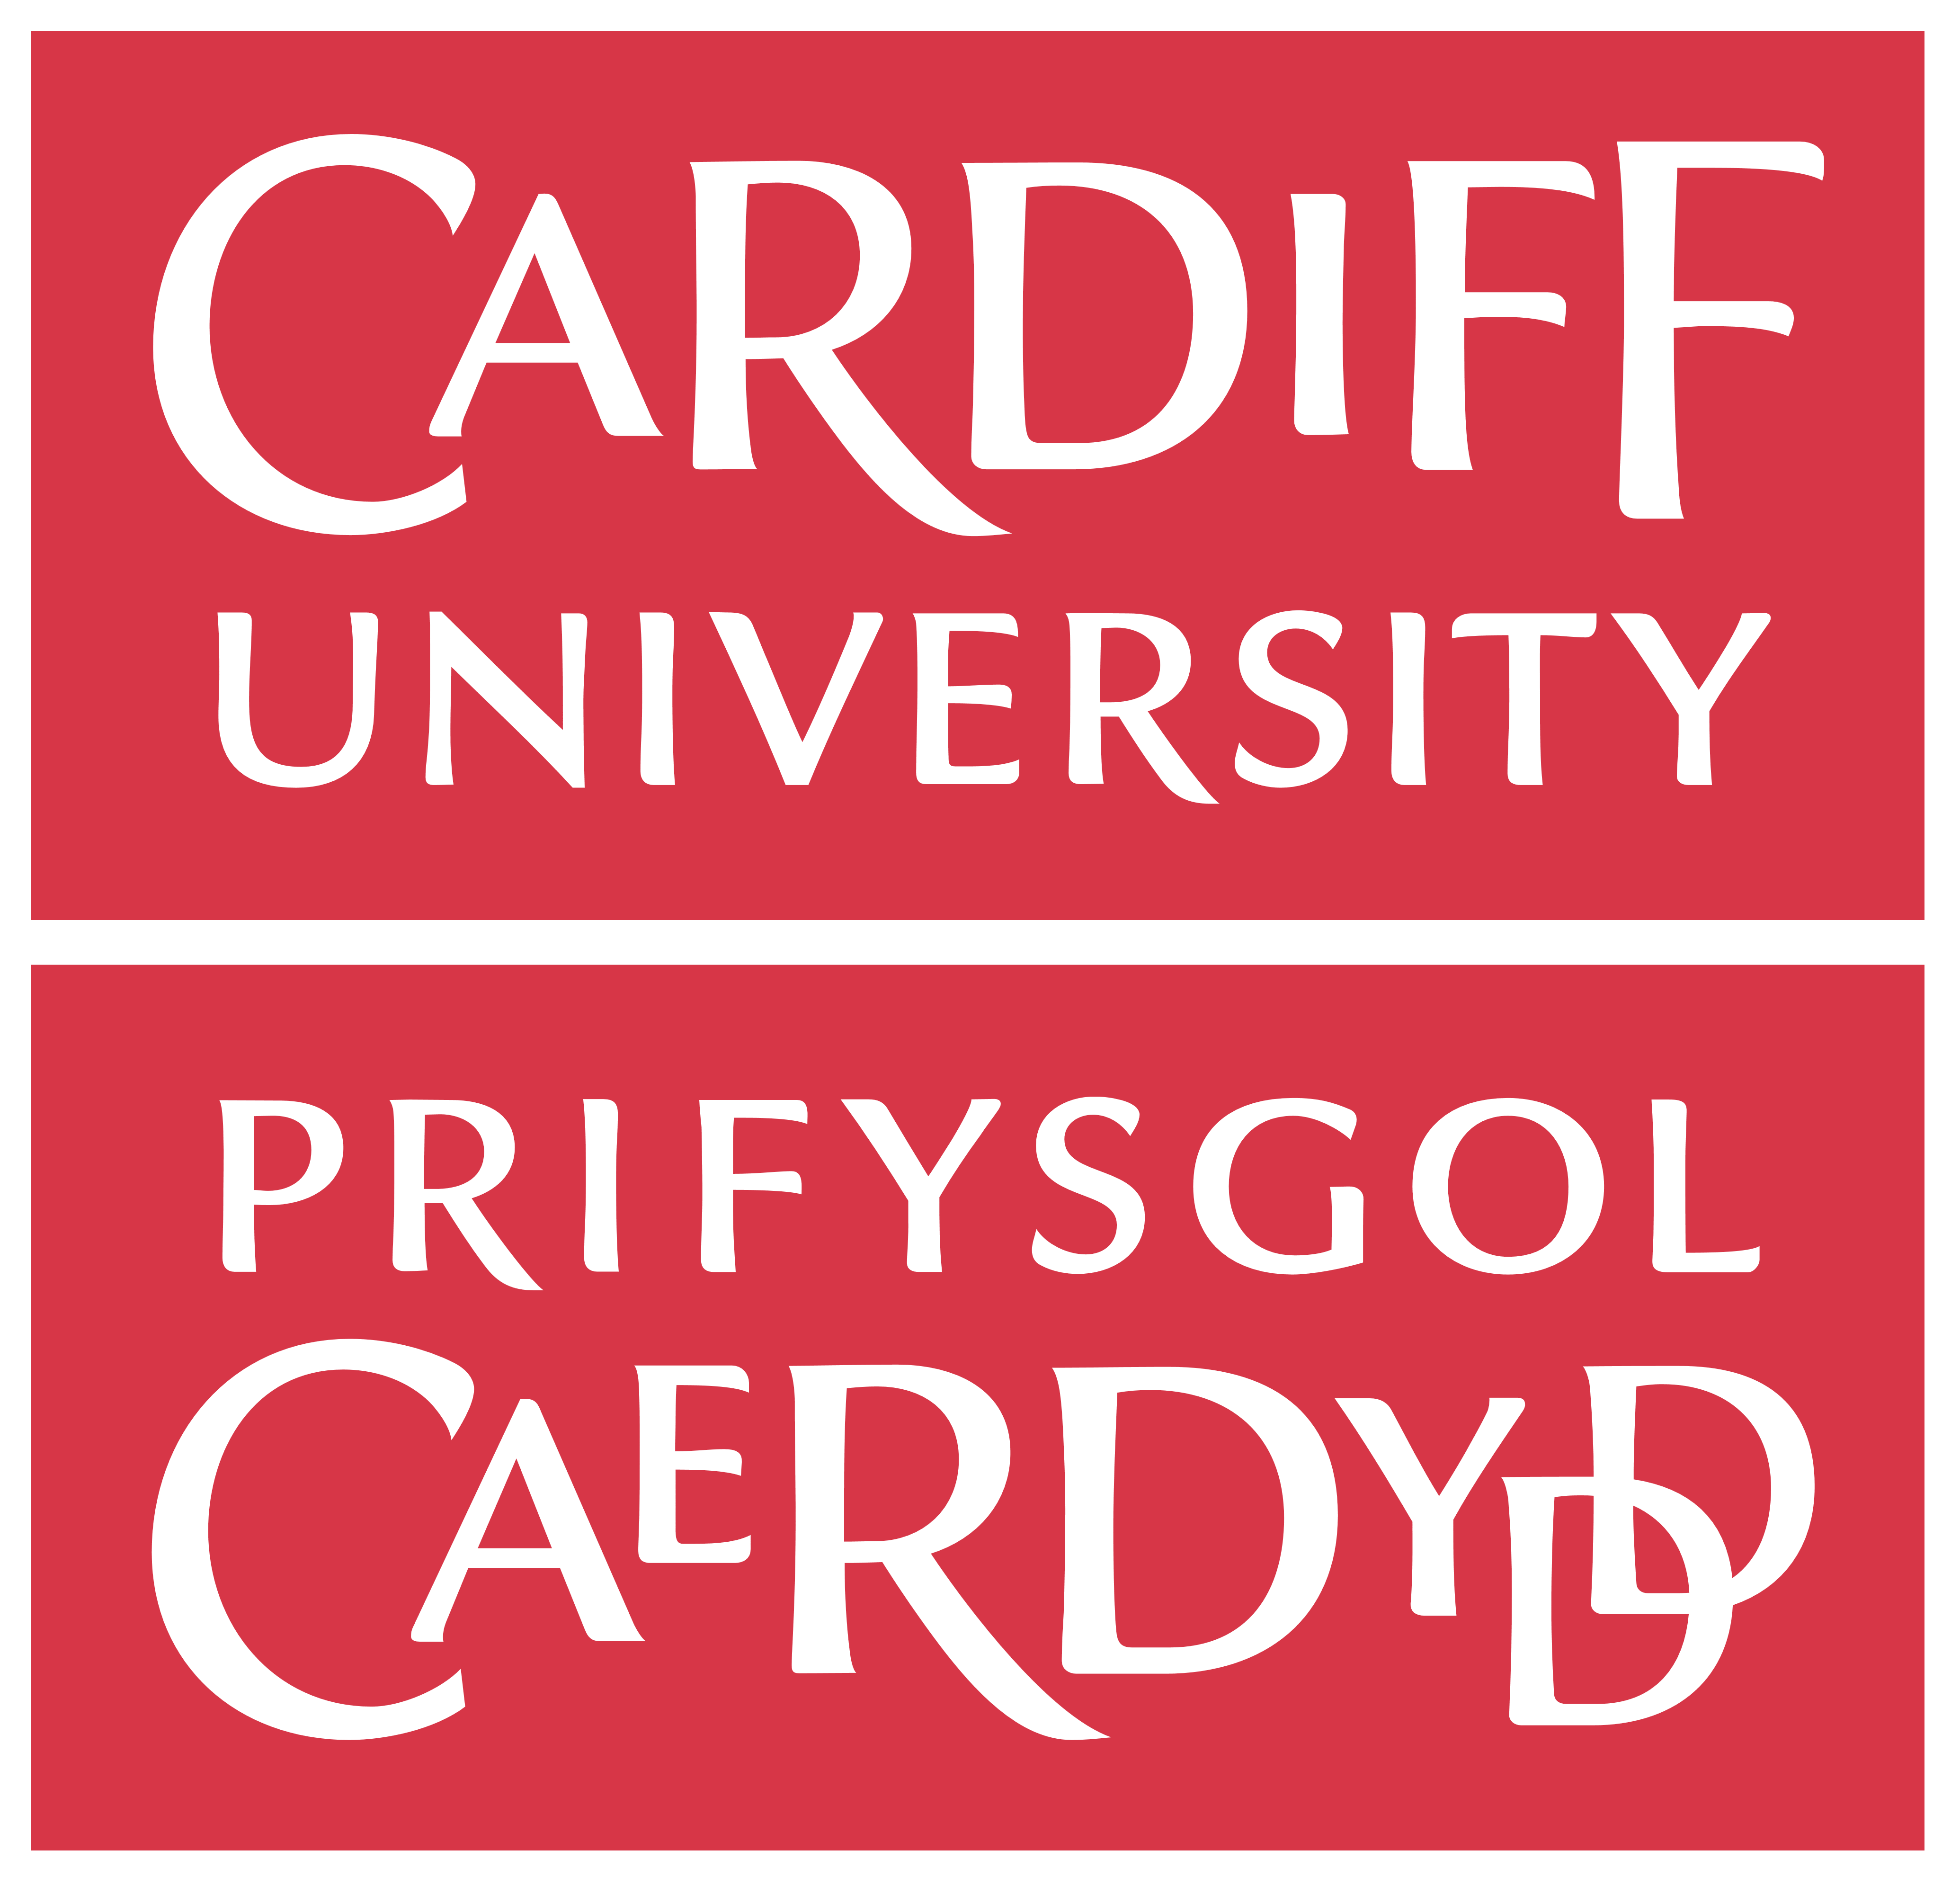 cardiff university cover letter